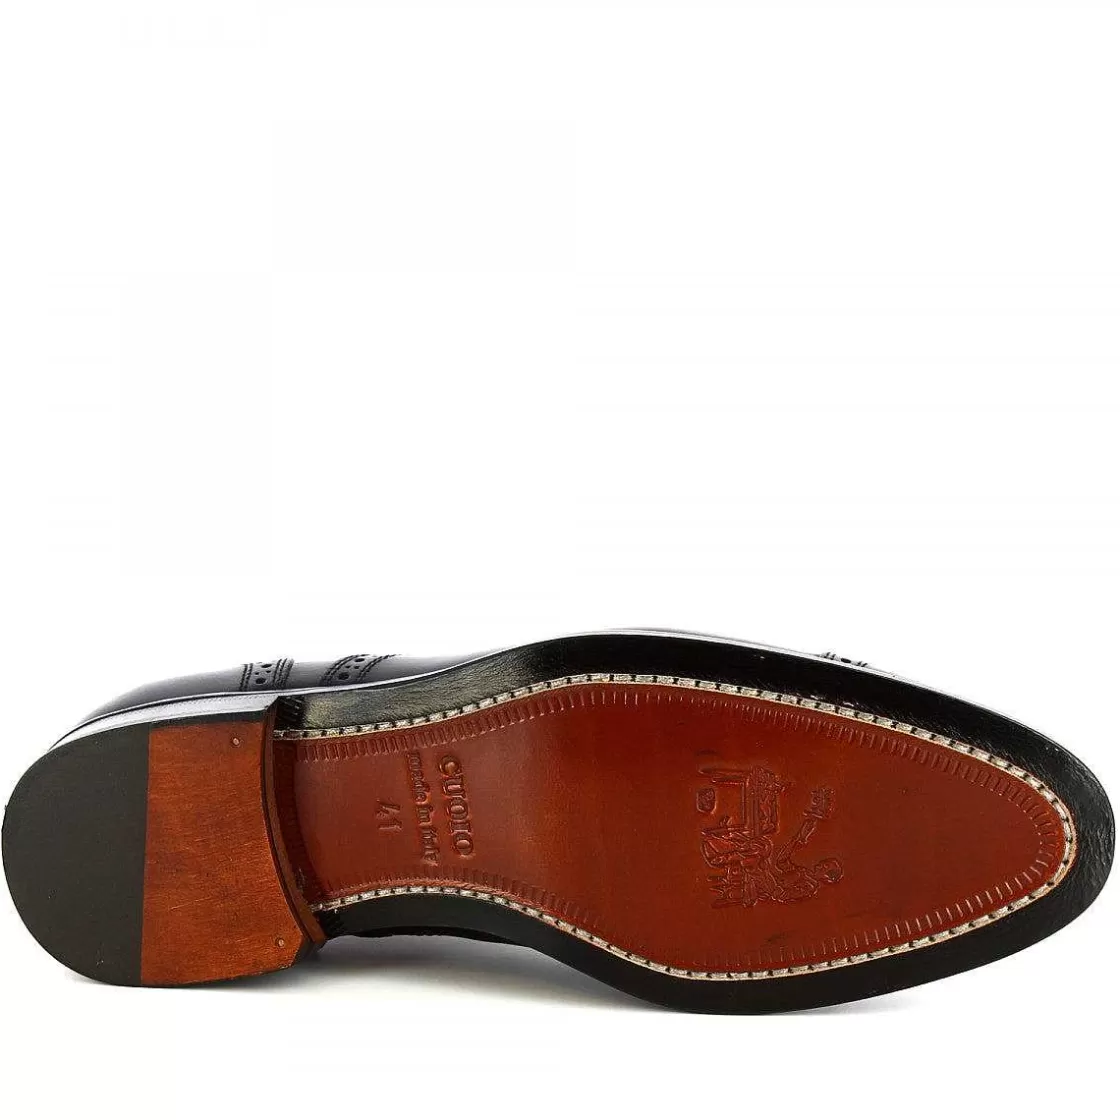 Leonardo Men'S Handmade Brogues Shoes In Black Calf Leather Cheap